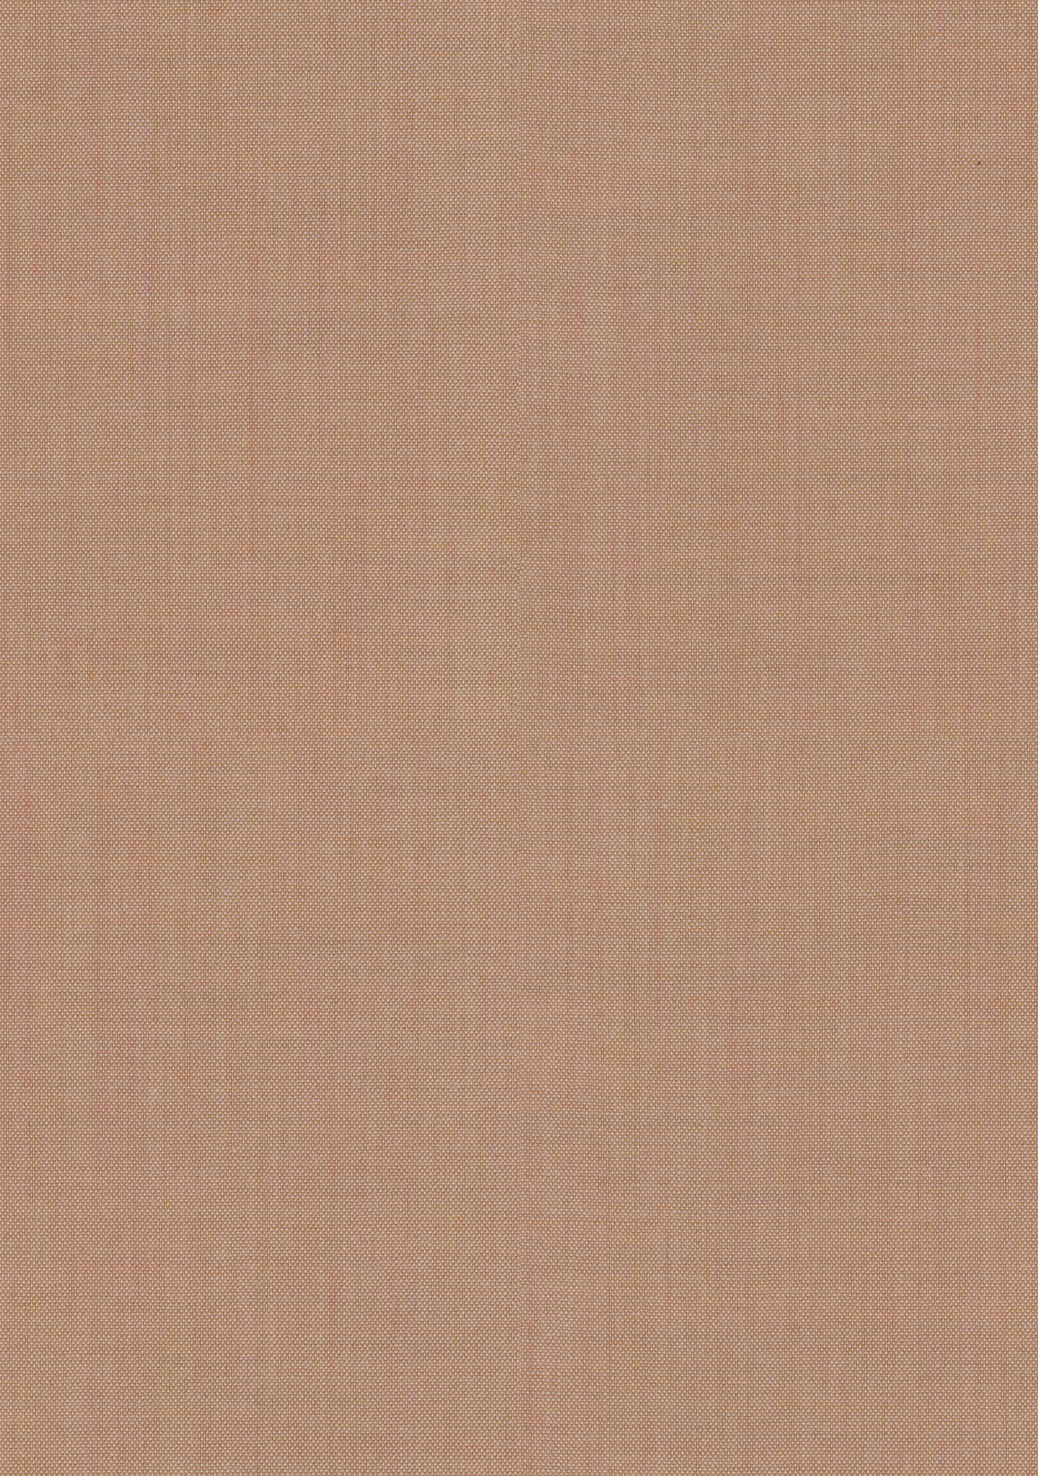 Fabric sample Remix 3 406 orange